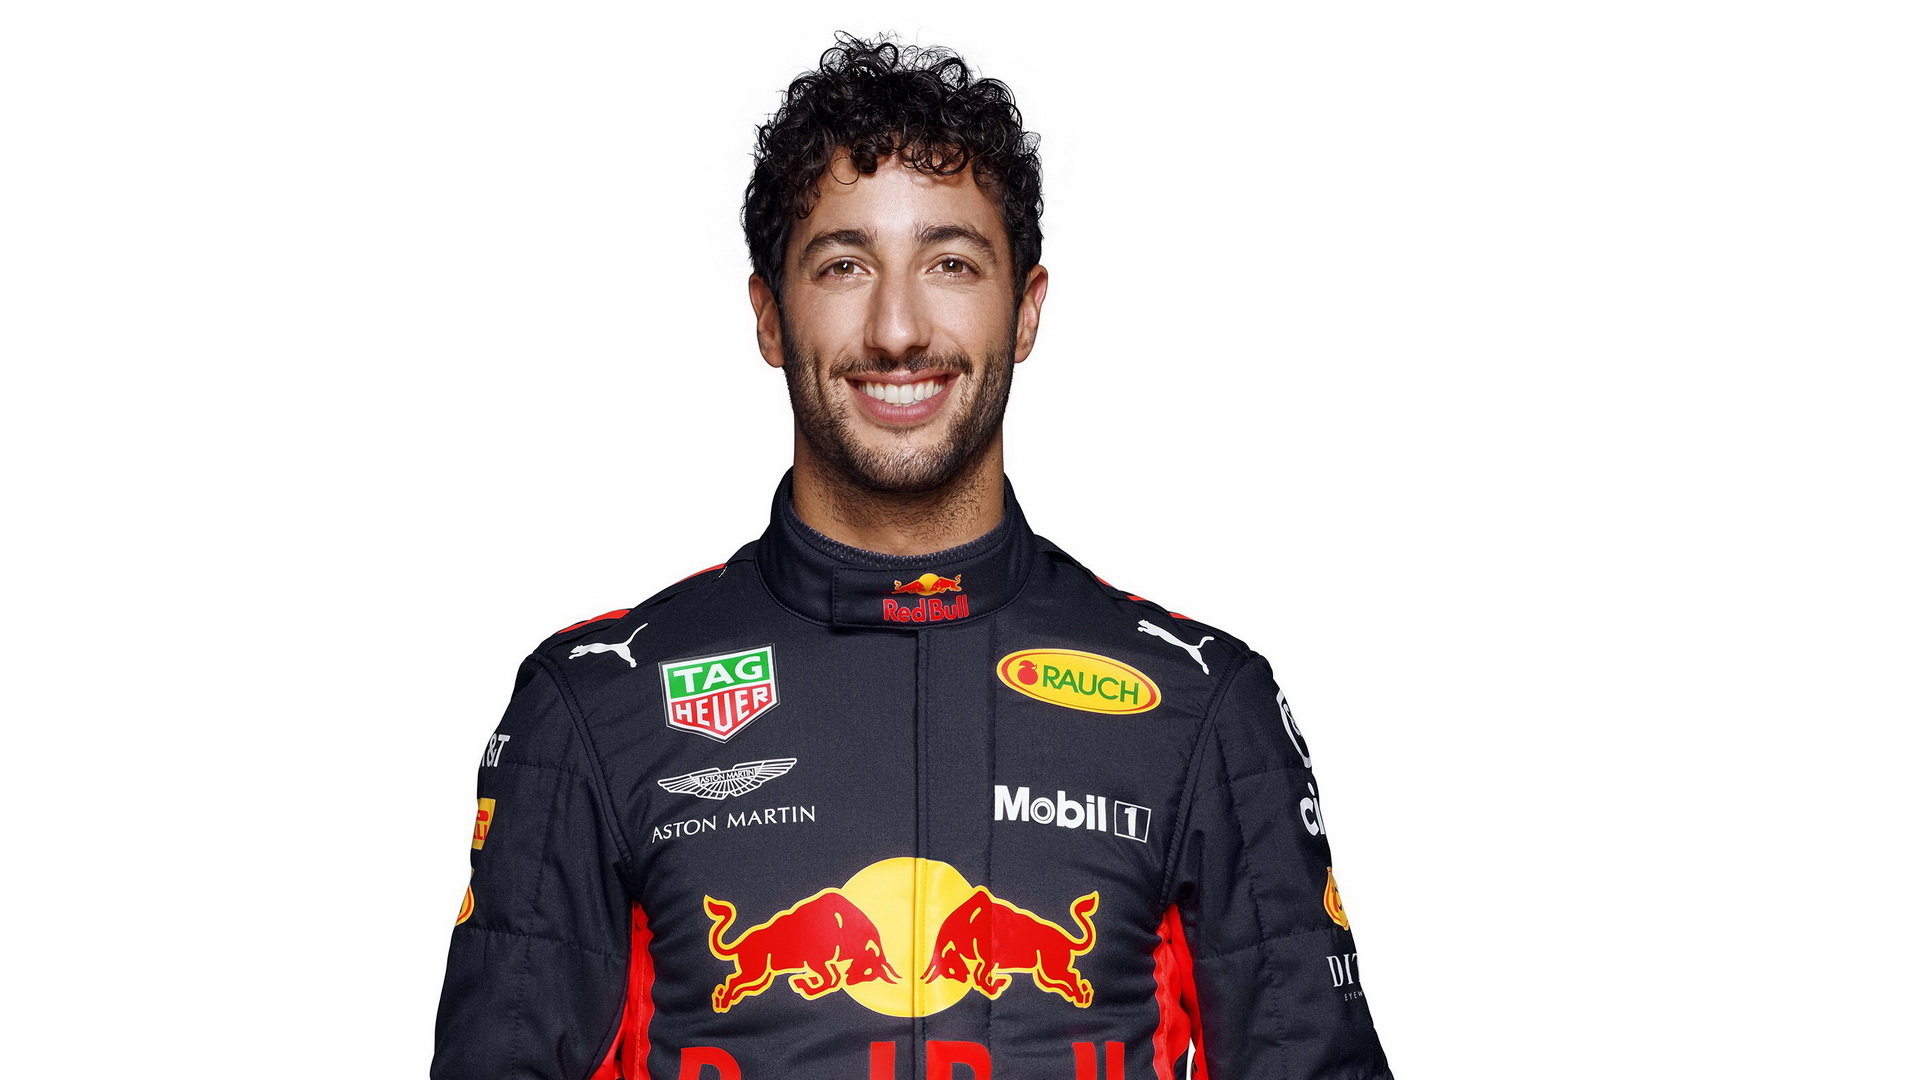 Daniel Ricciardo krátce po poledni překonává Hamiltona. Zapojí se Red Bull letos do bitvy o titul?